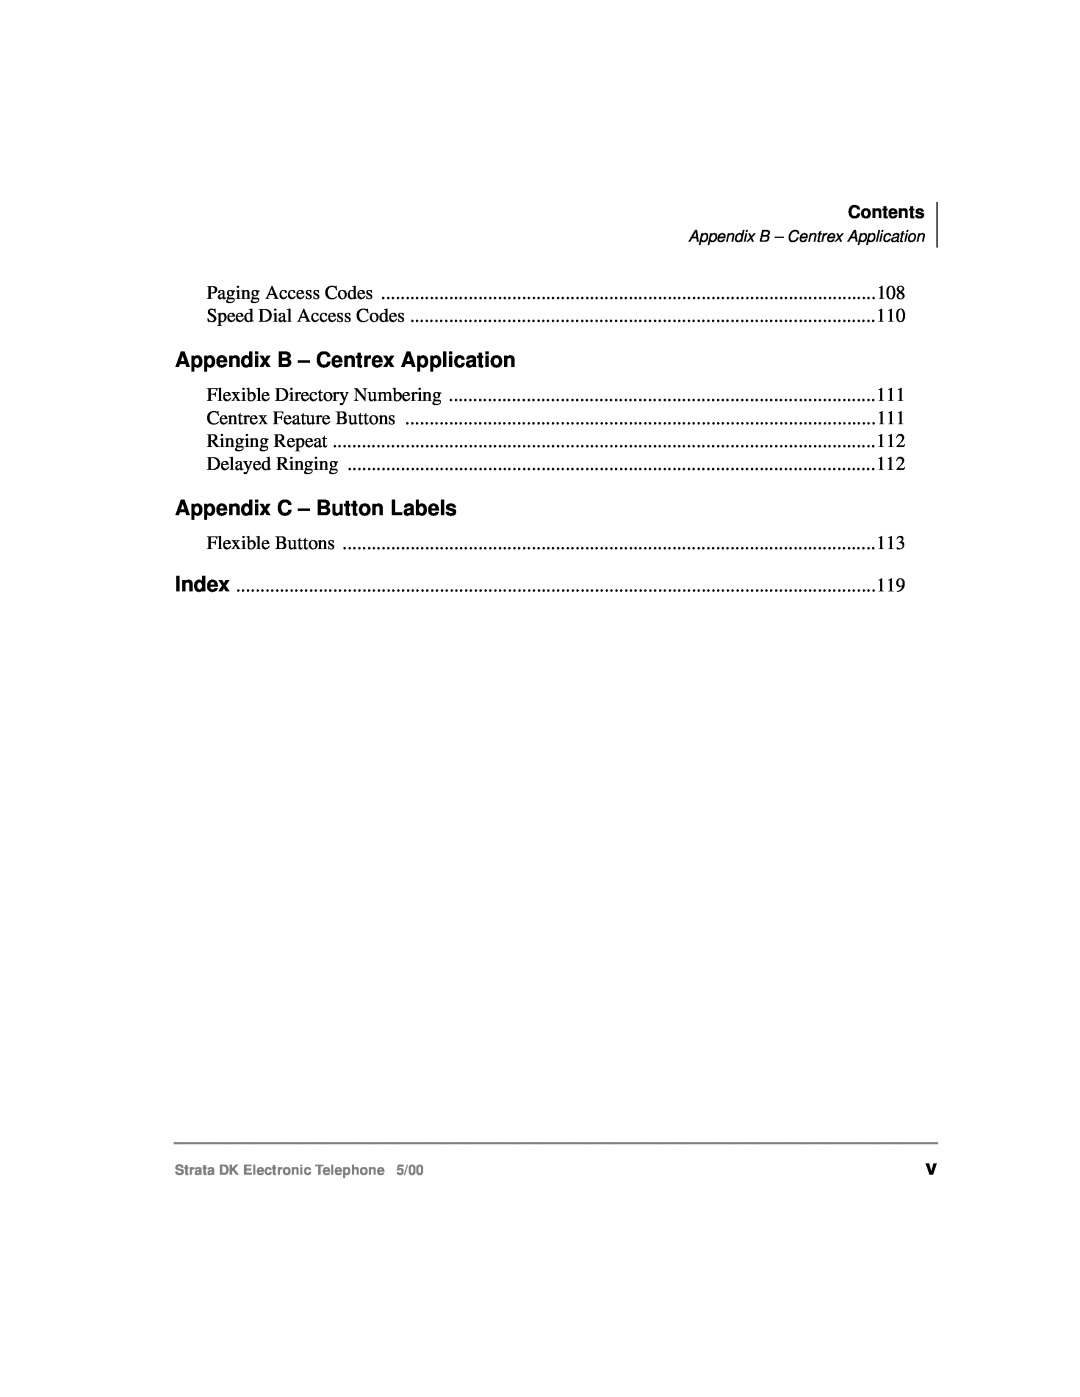 Toshiba Strata DK manual Appendix B - Centrex Application, Appendix C - Button Labels, Contents, Paging Access Codes, Index 